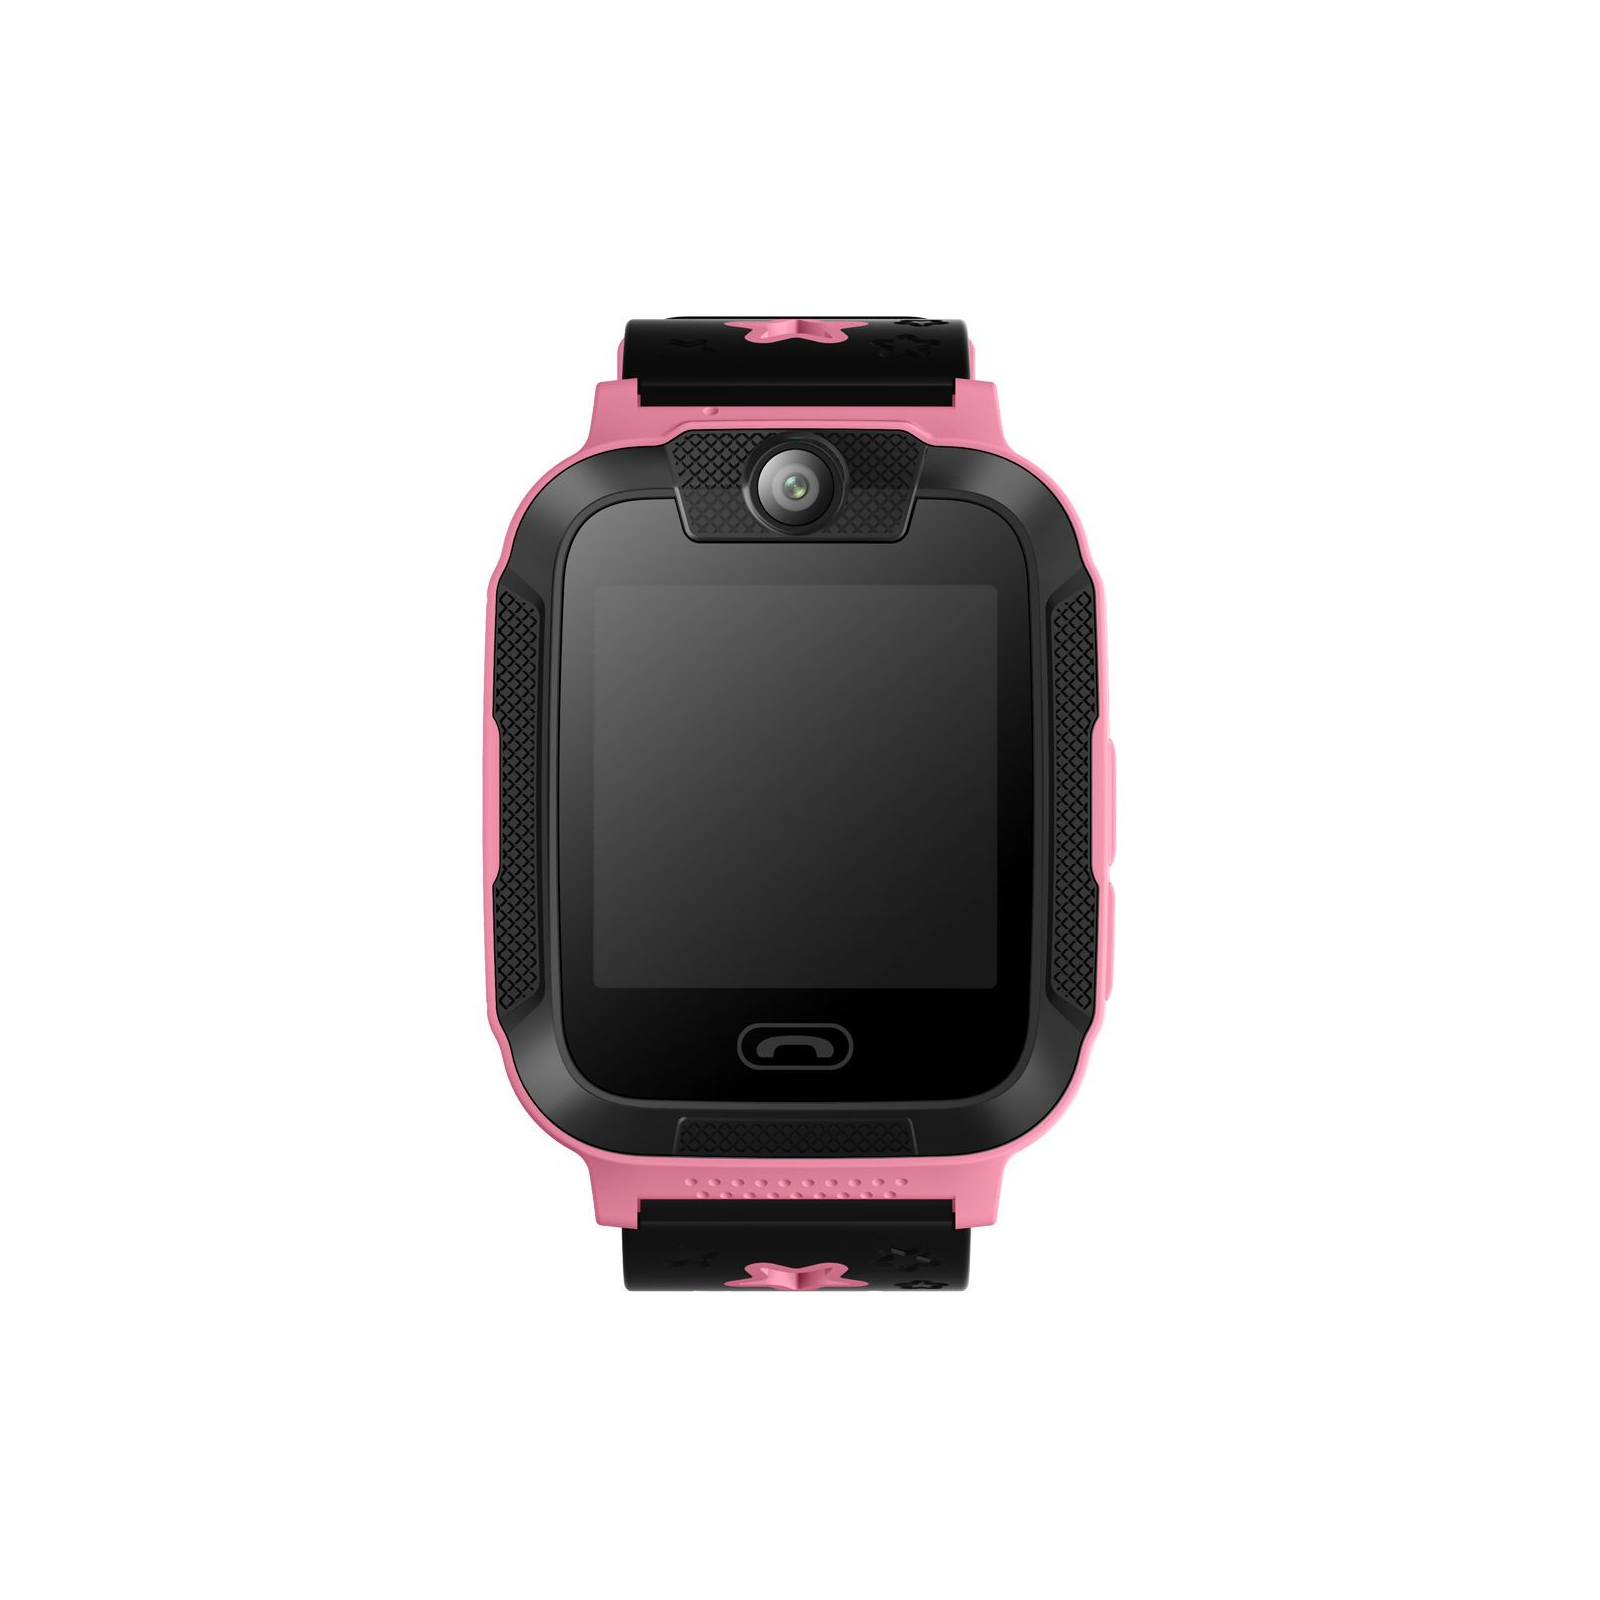 Смарт-часы UWatch G302 Kid smart watch Pink (F_54052) изображение 2